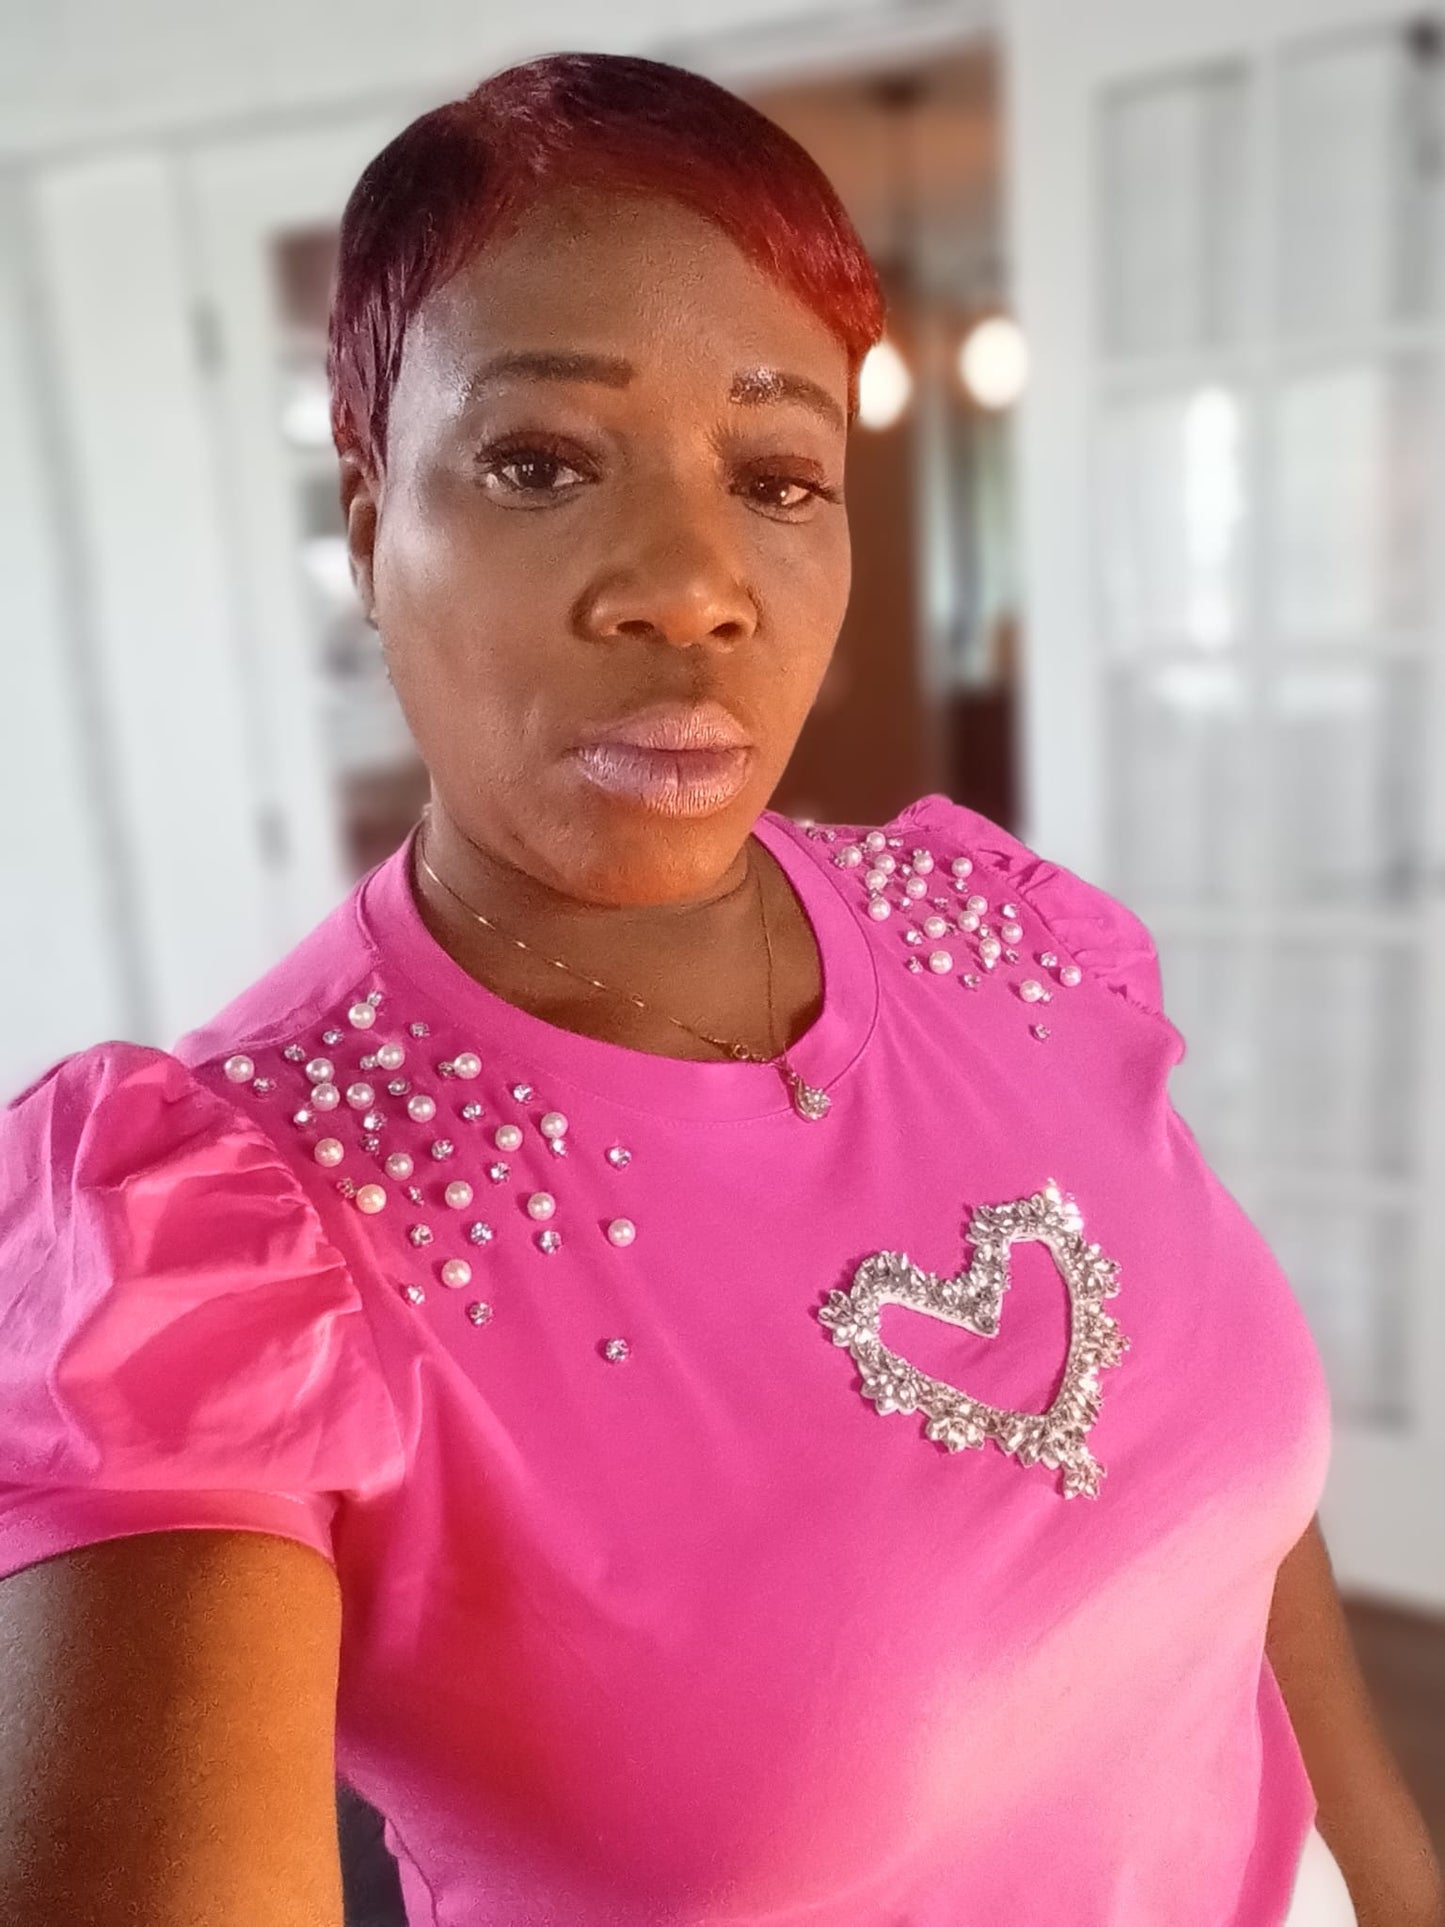 women pink Tee shirt with diamond heart